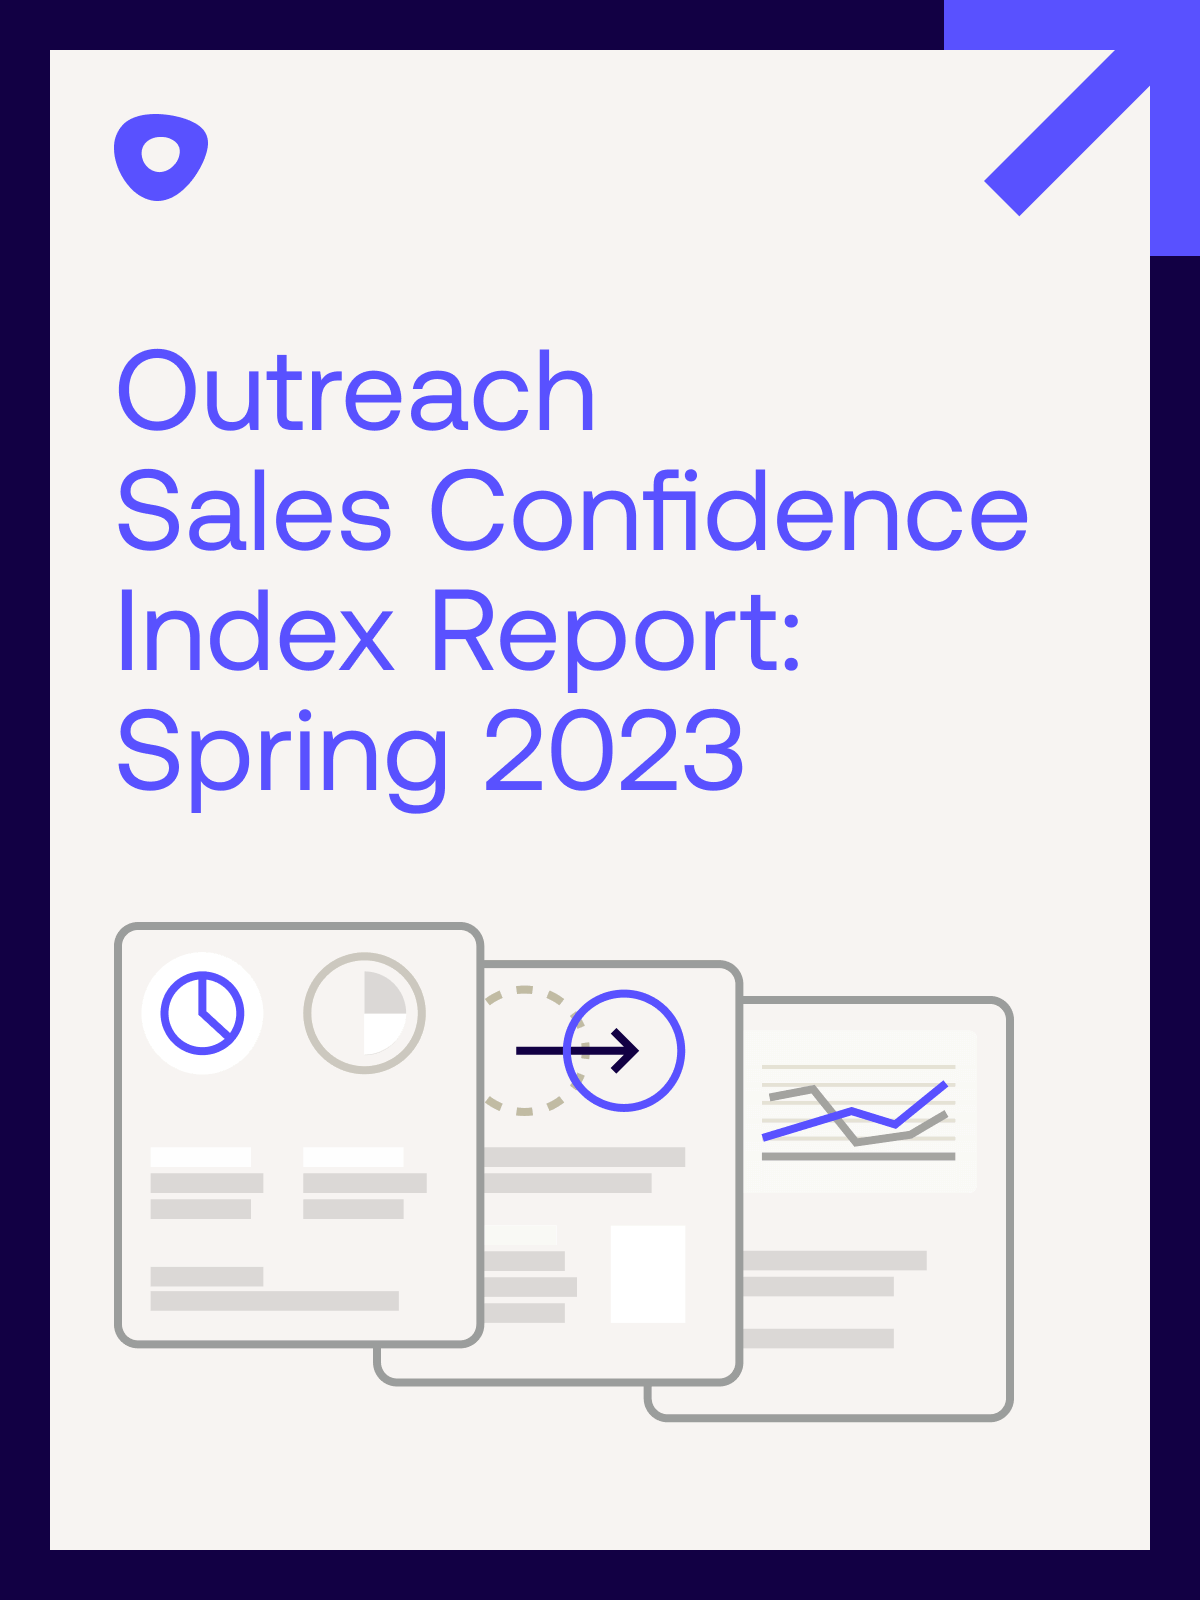 Sales confidence index 2023